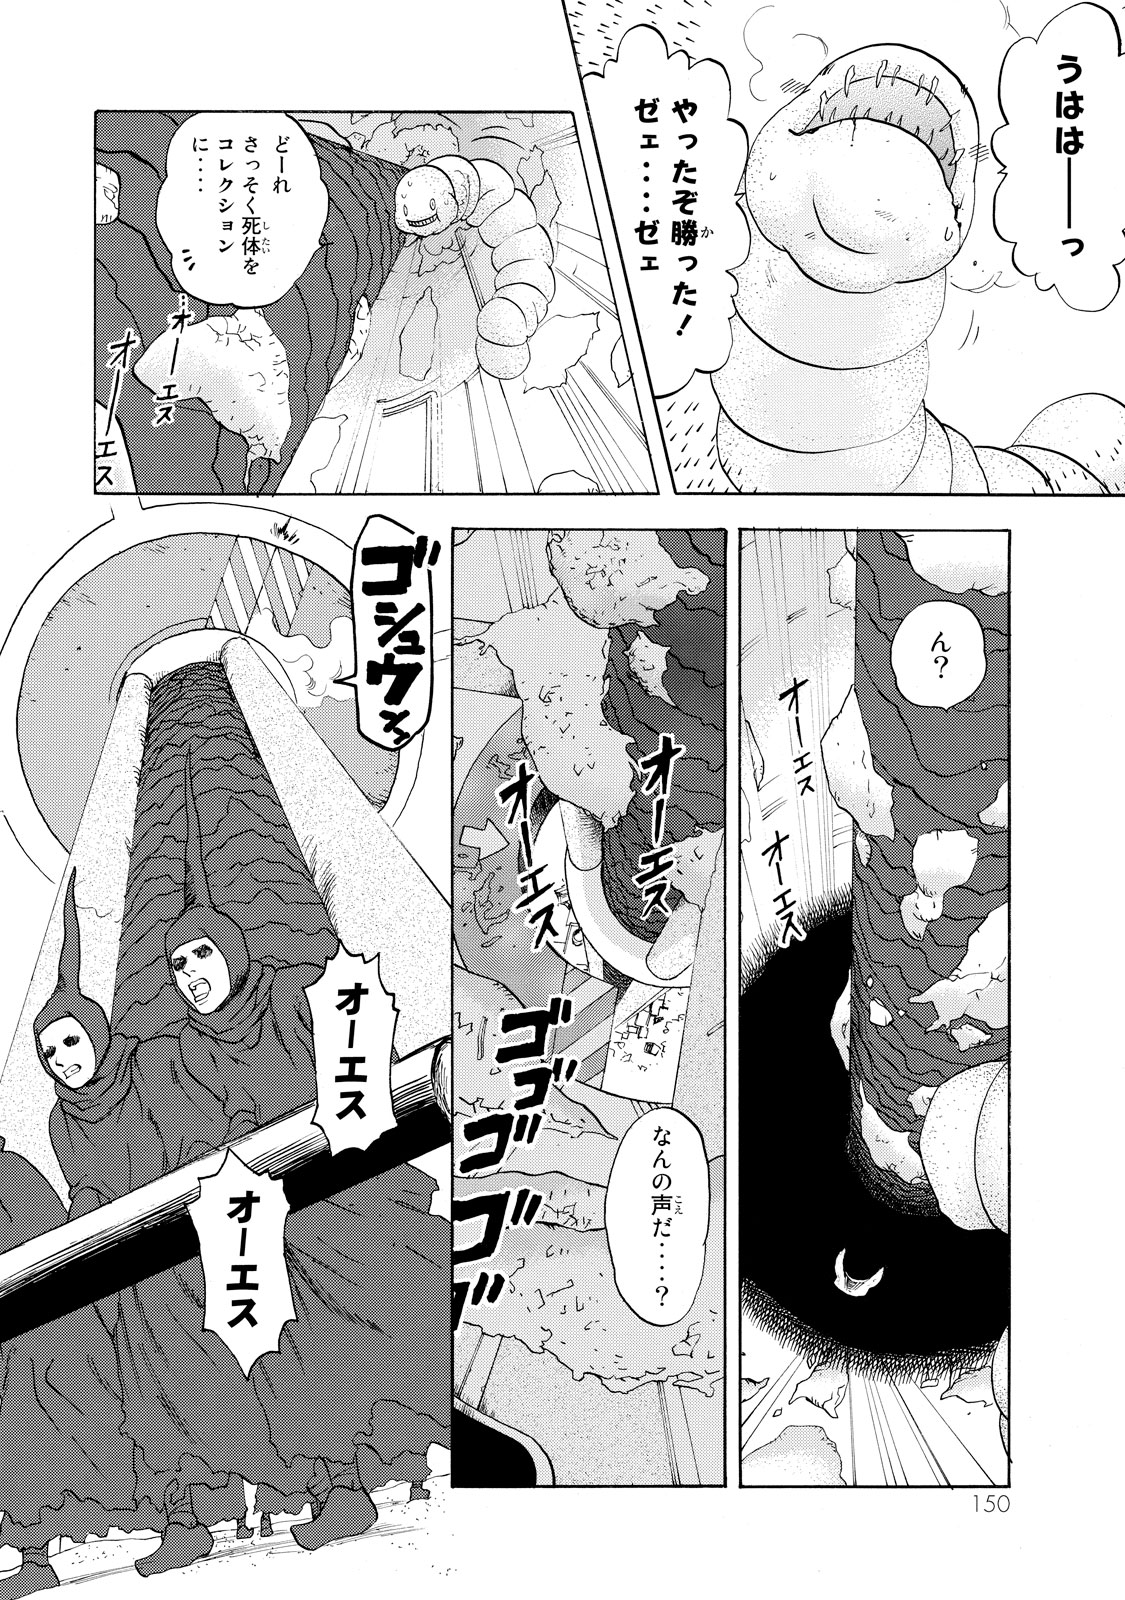 Hataraku Saibou - Chapter 14 - Page 22